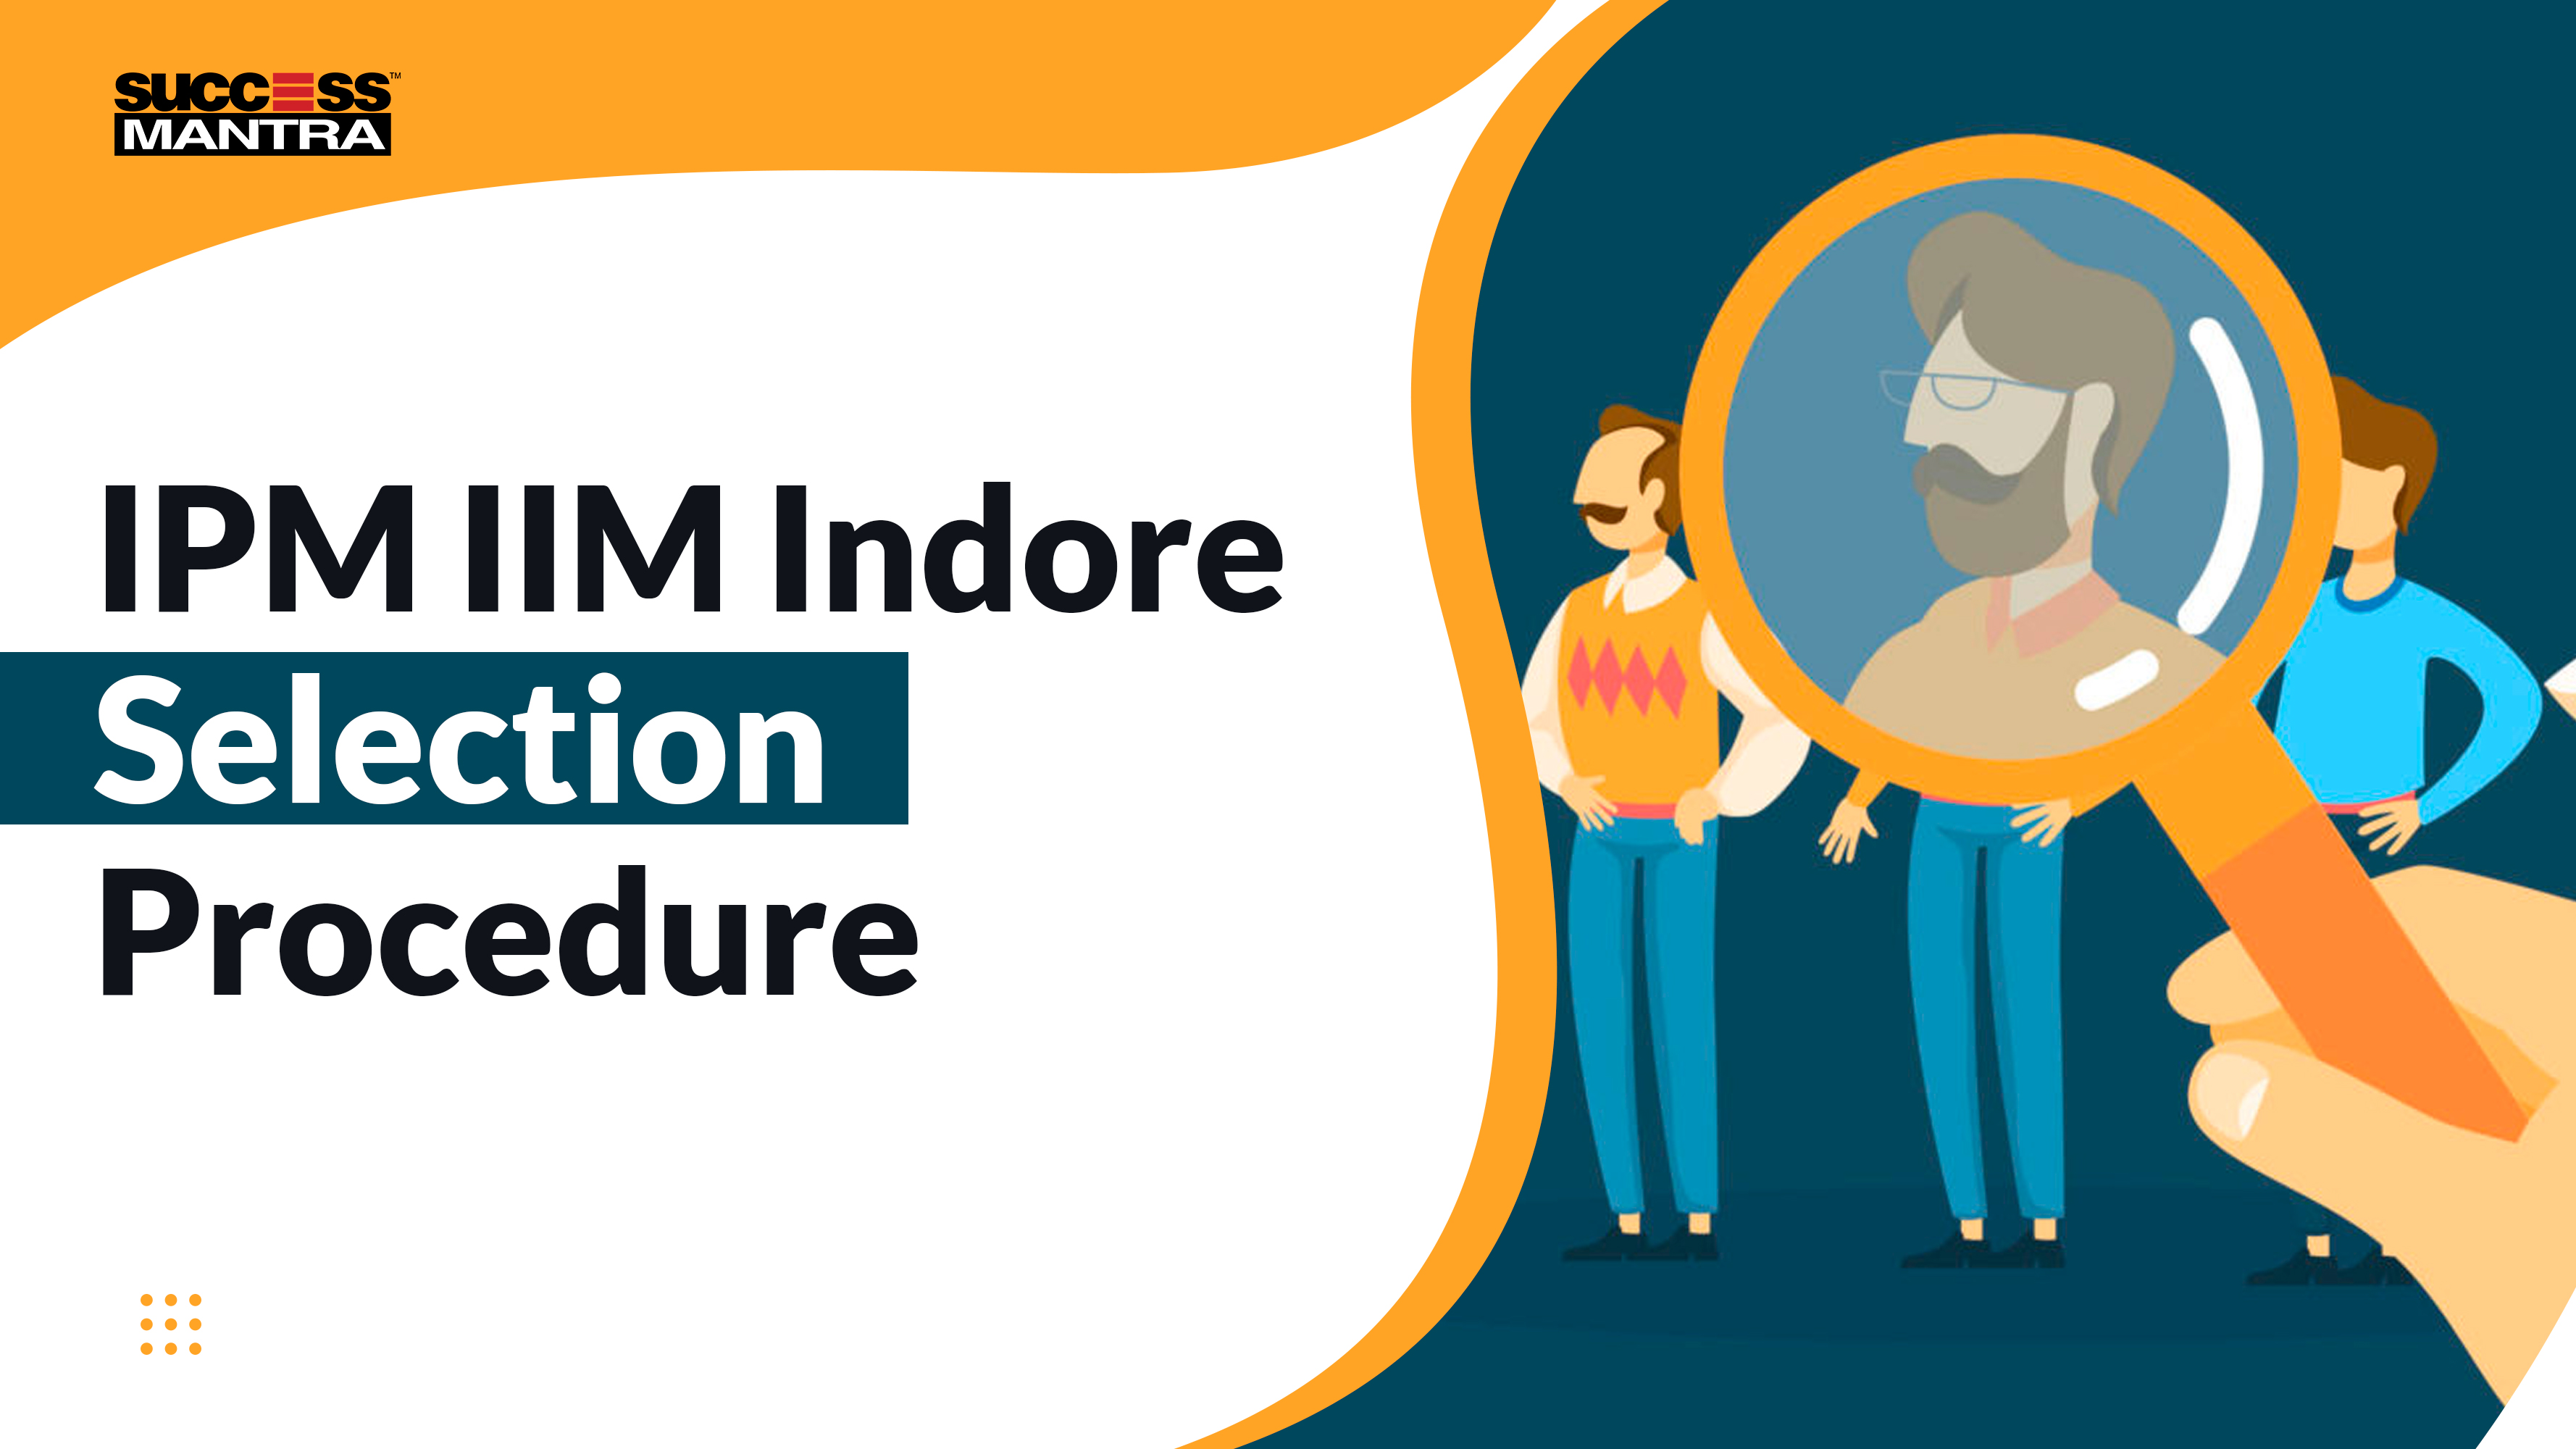 IPM IIM Indore Selection Procedure